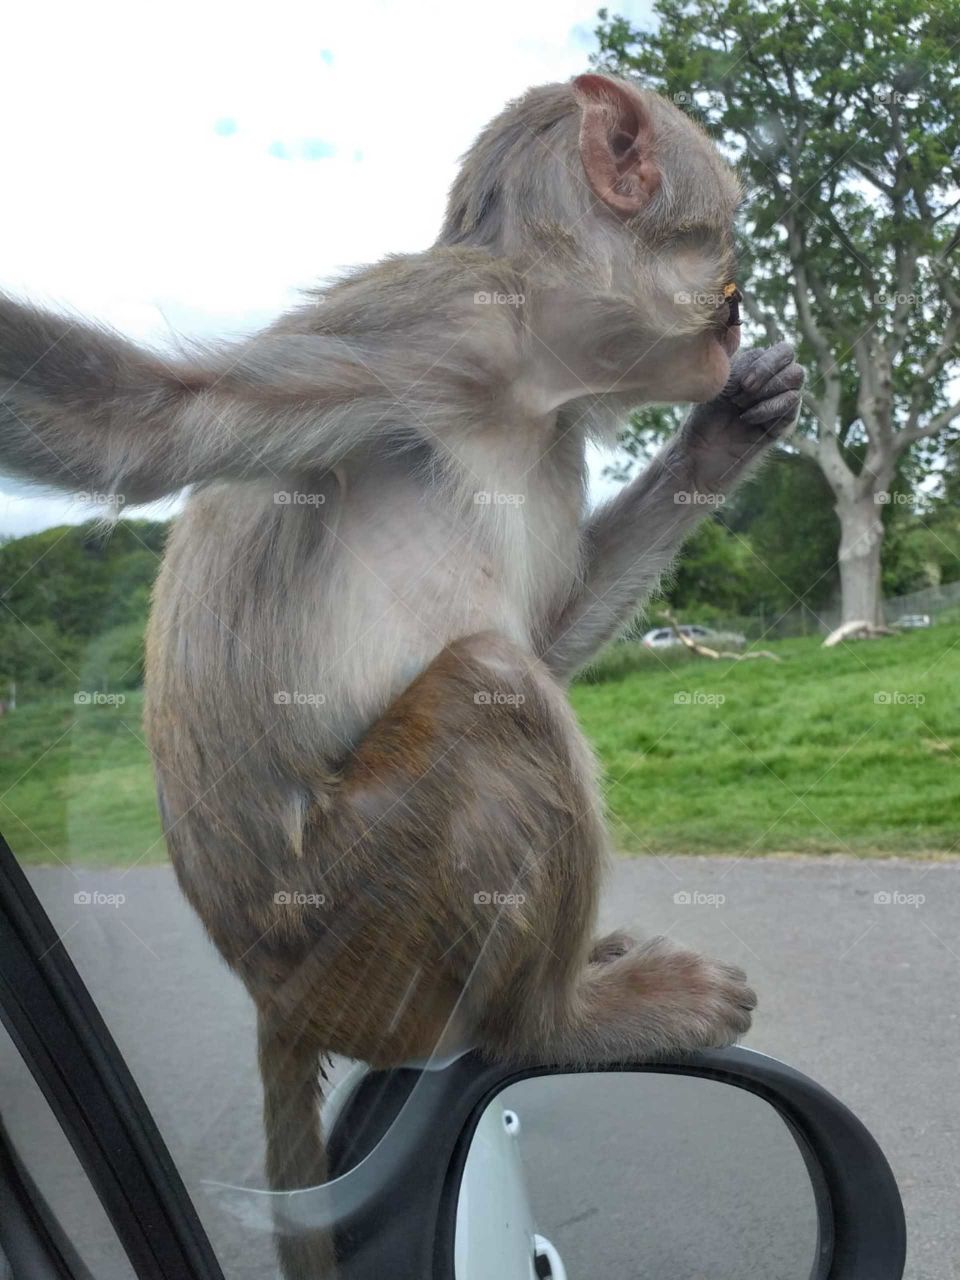 Cute little monkey sitting on my car! 